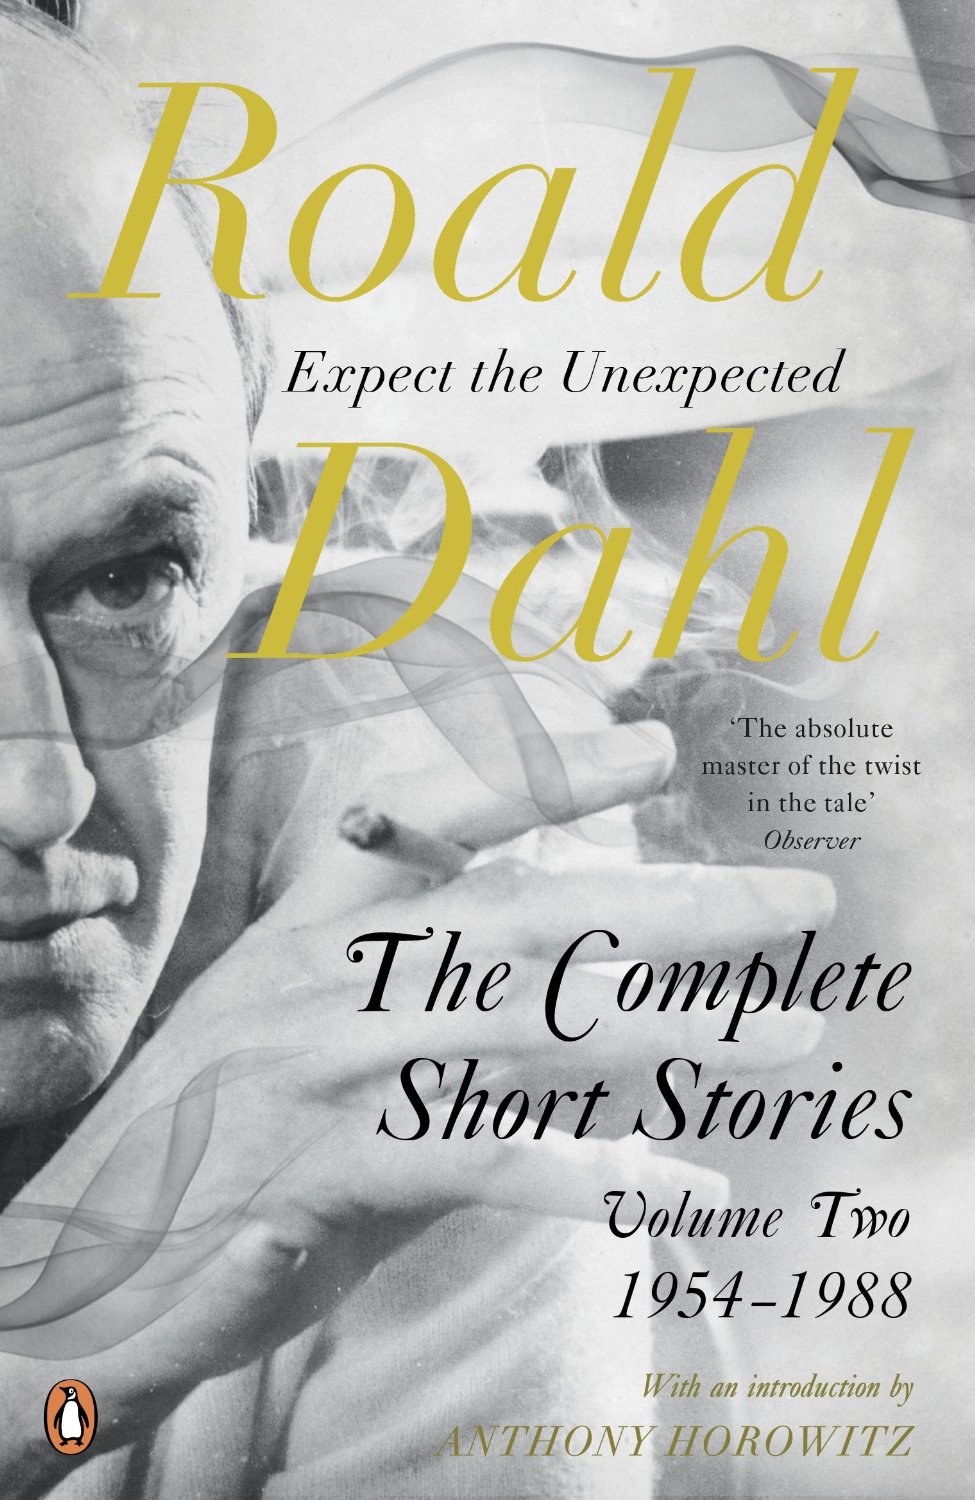 The Collected Short Stories of Roald Dahl, Volume 2 (2014) by Roald Dahl